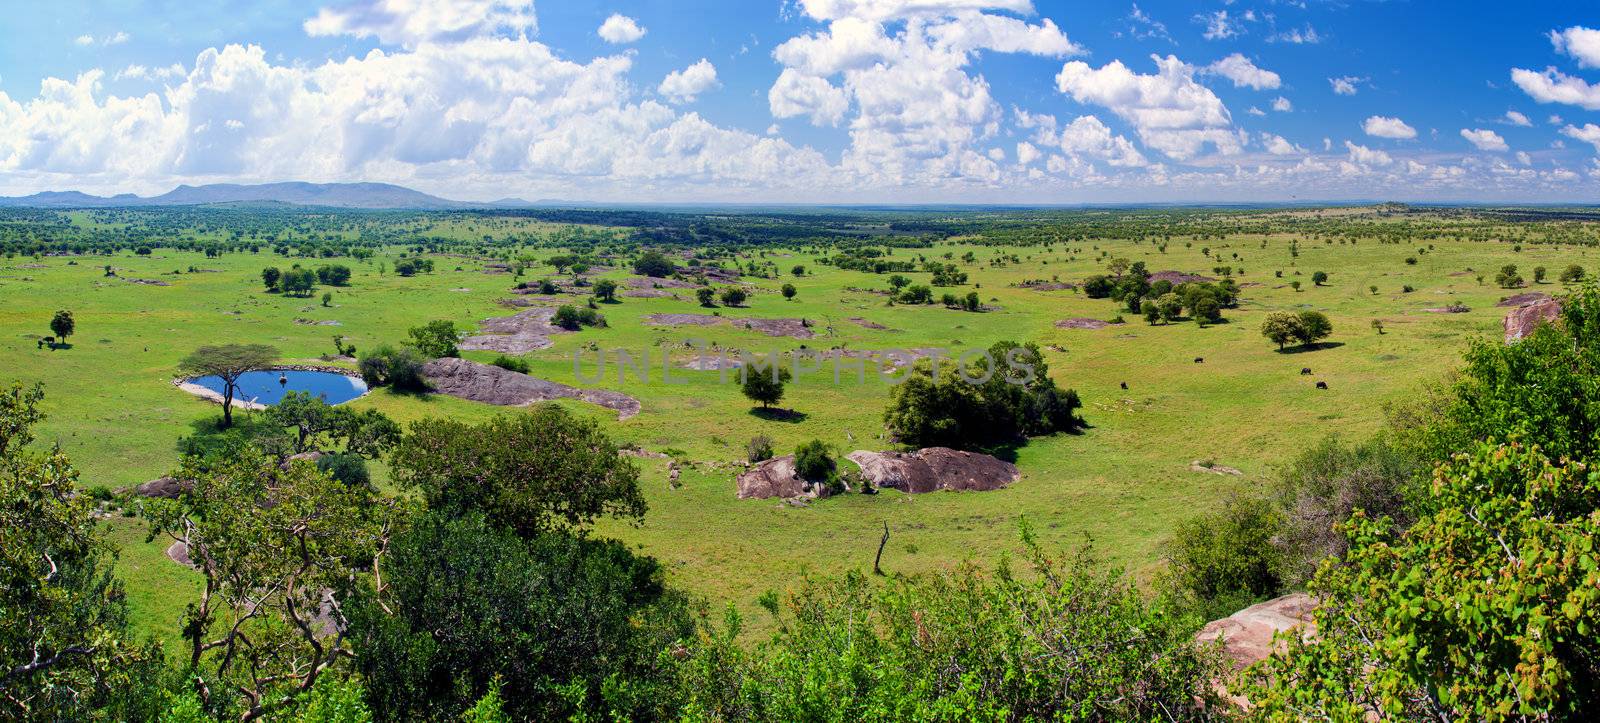 Savanna landscape panorama in Serengeti, Tanzania, Africa